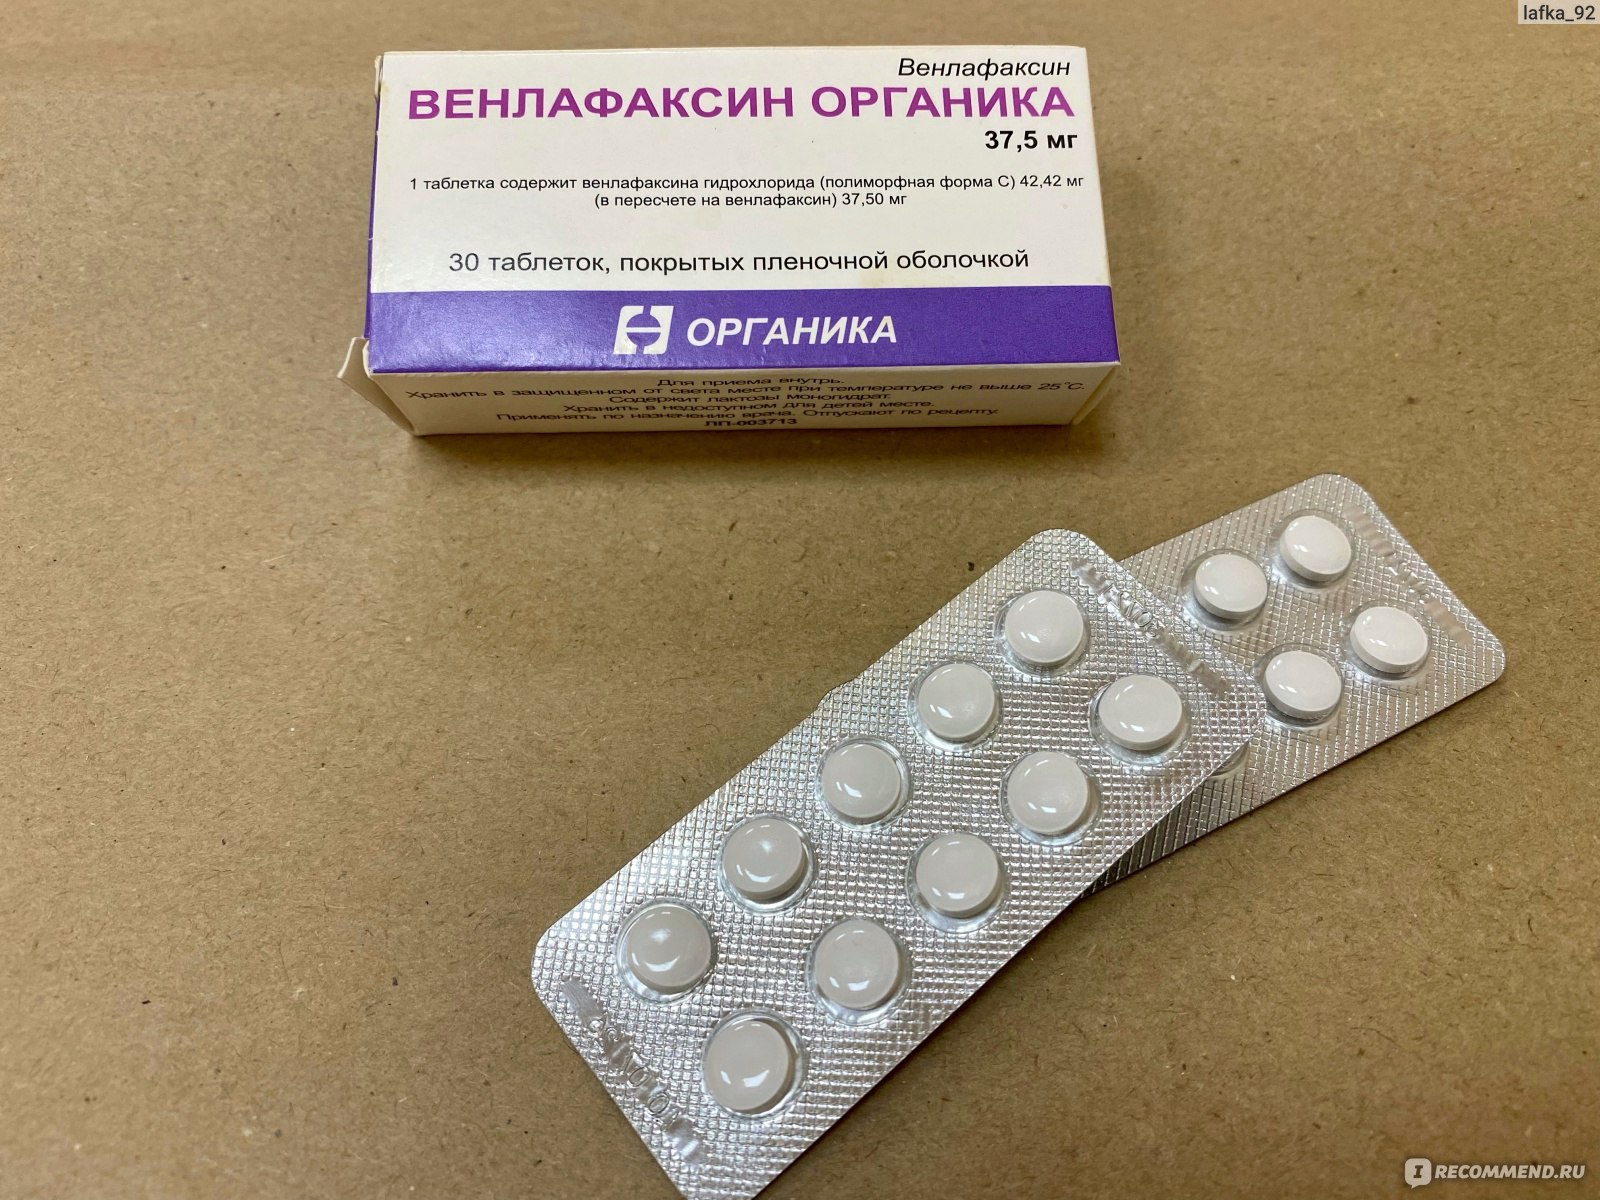 Лекарственный препарат Органика Антидепрессант Венлафаксин 75 МГ .